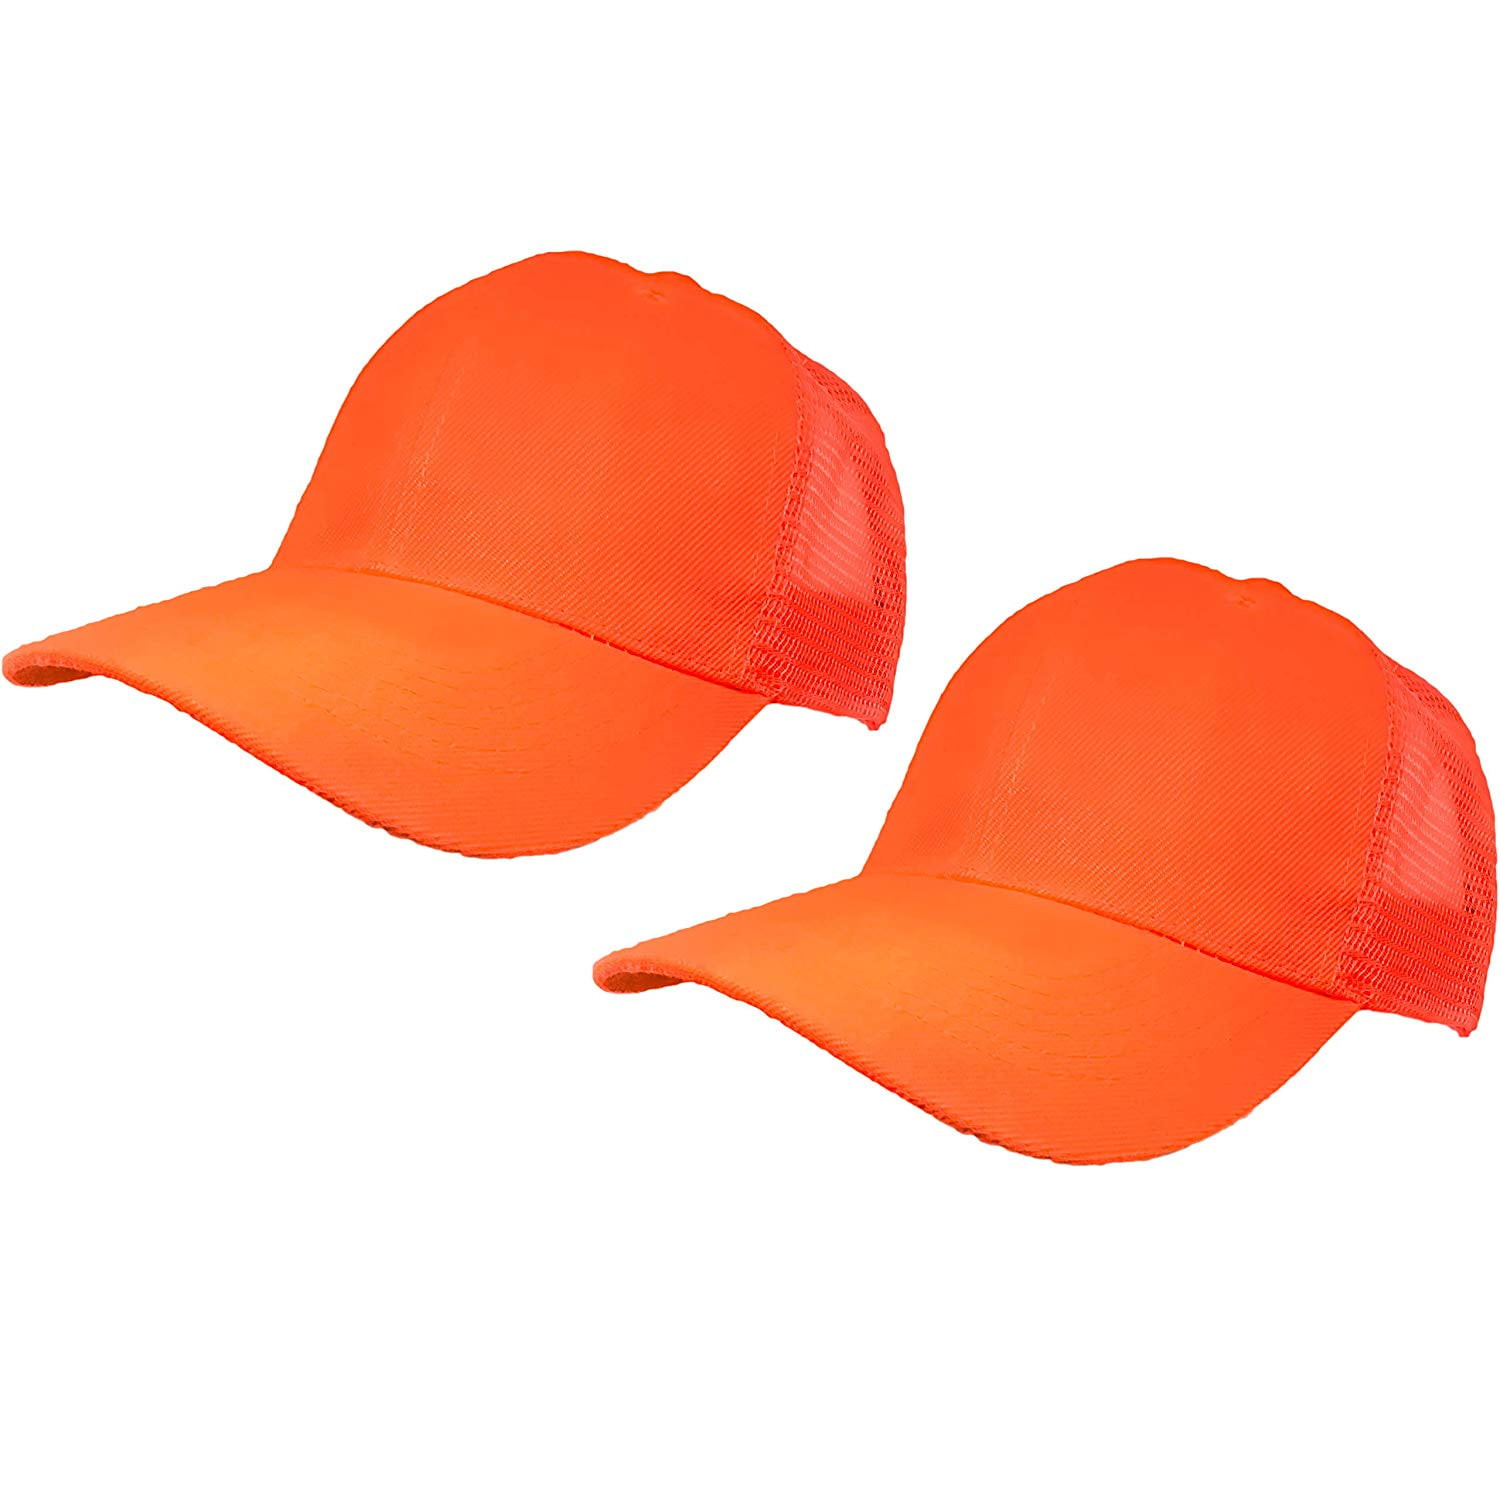 Duck Back Bright Orange Adjustable Black Visual Safety Brand Mesh Hat) Baseball Hunting Cap (1